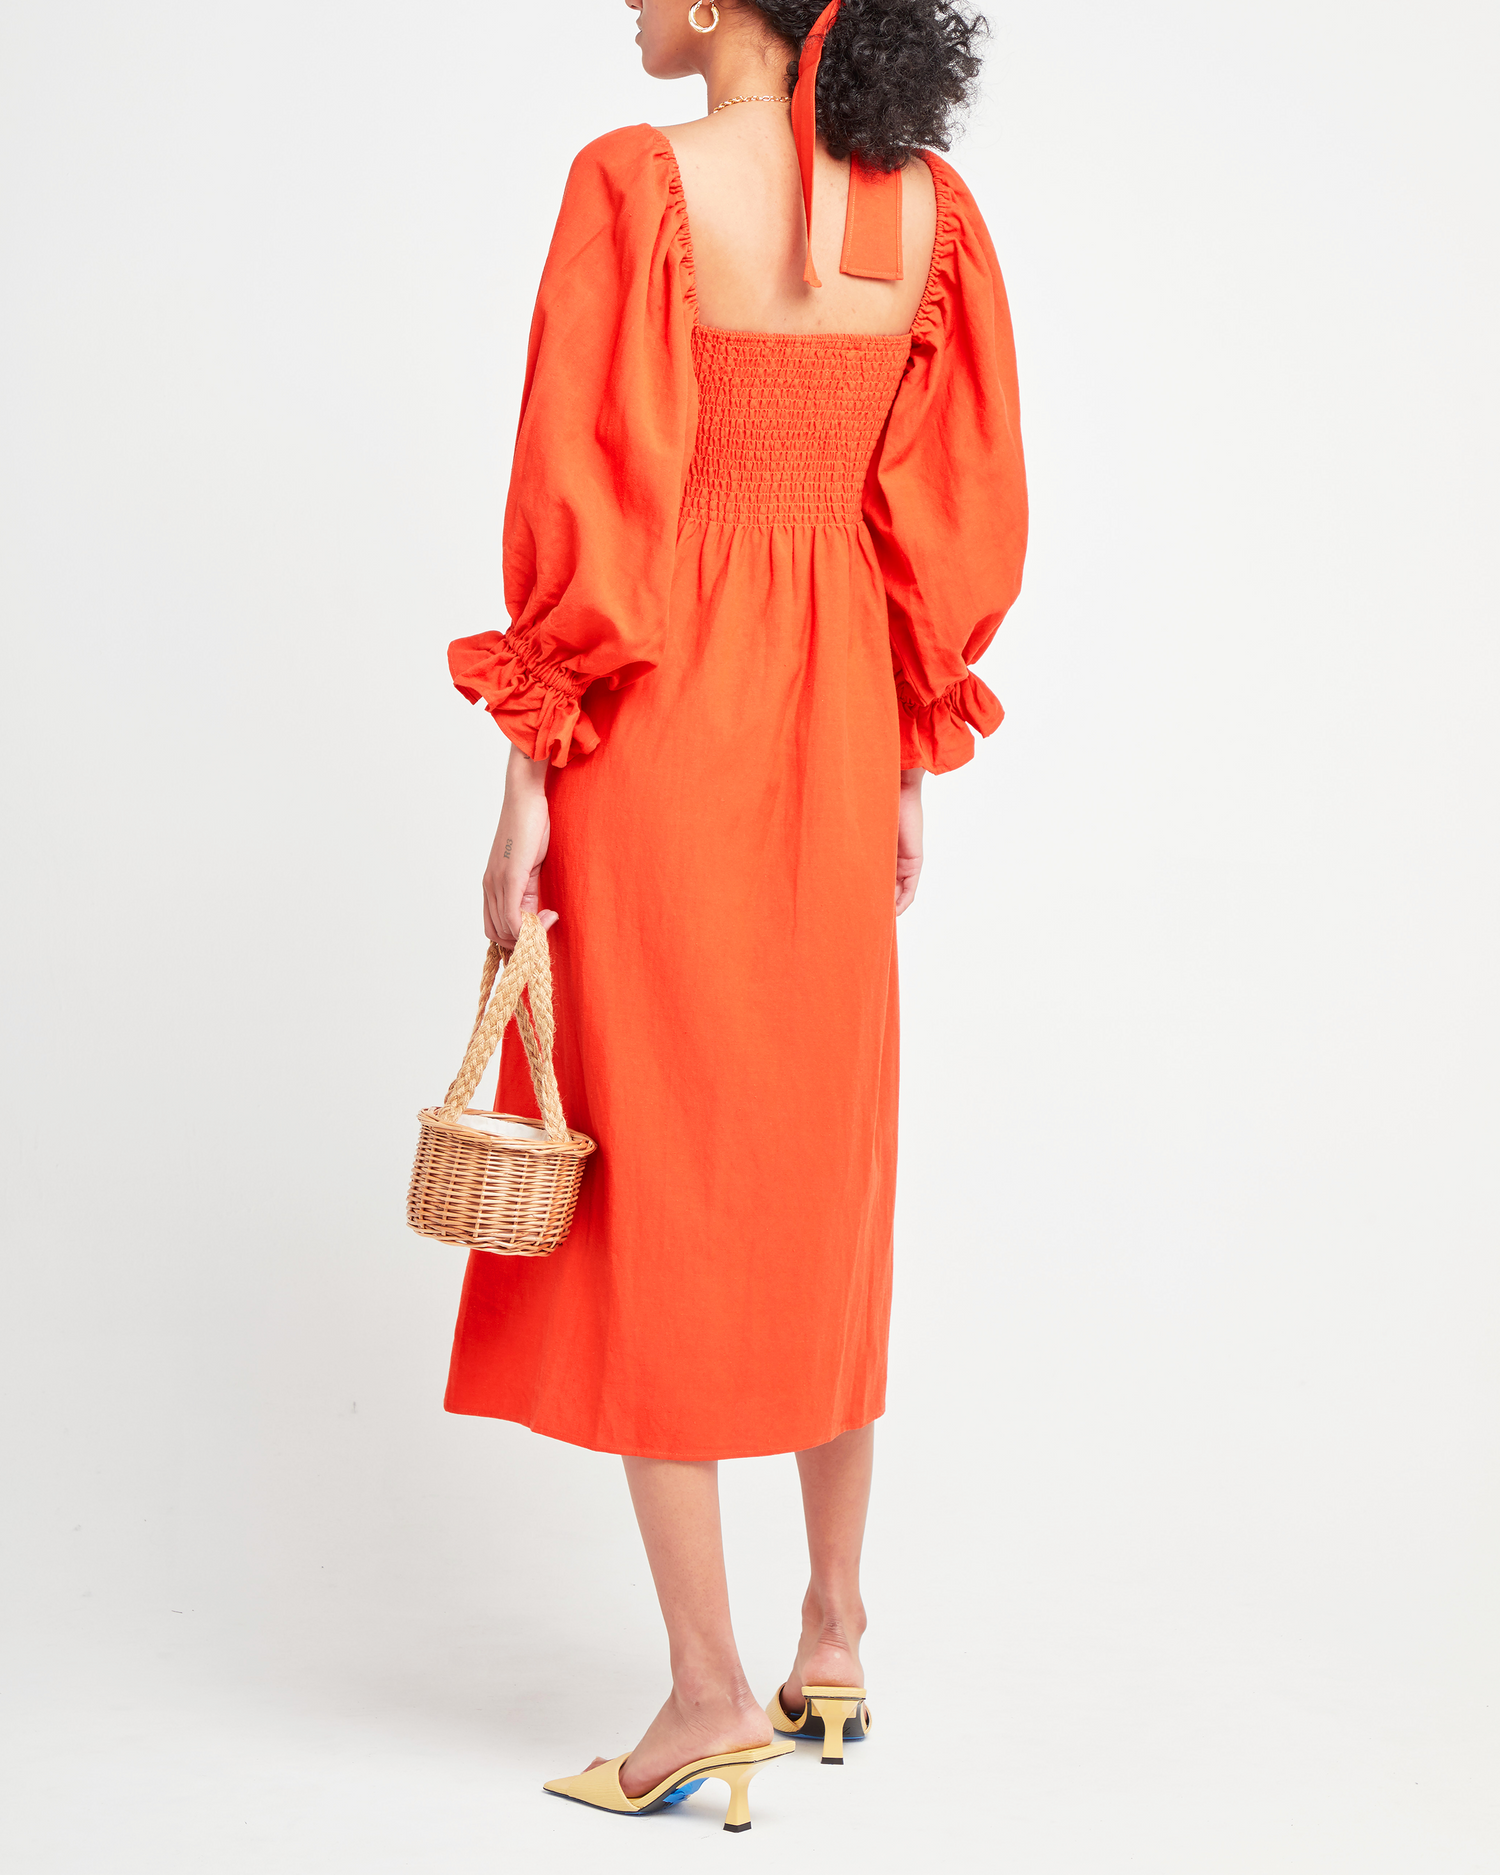 Sixth image of Athena Dress, a orange midi dress, long puff sleeves, smocked, square neckline